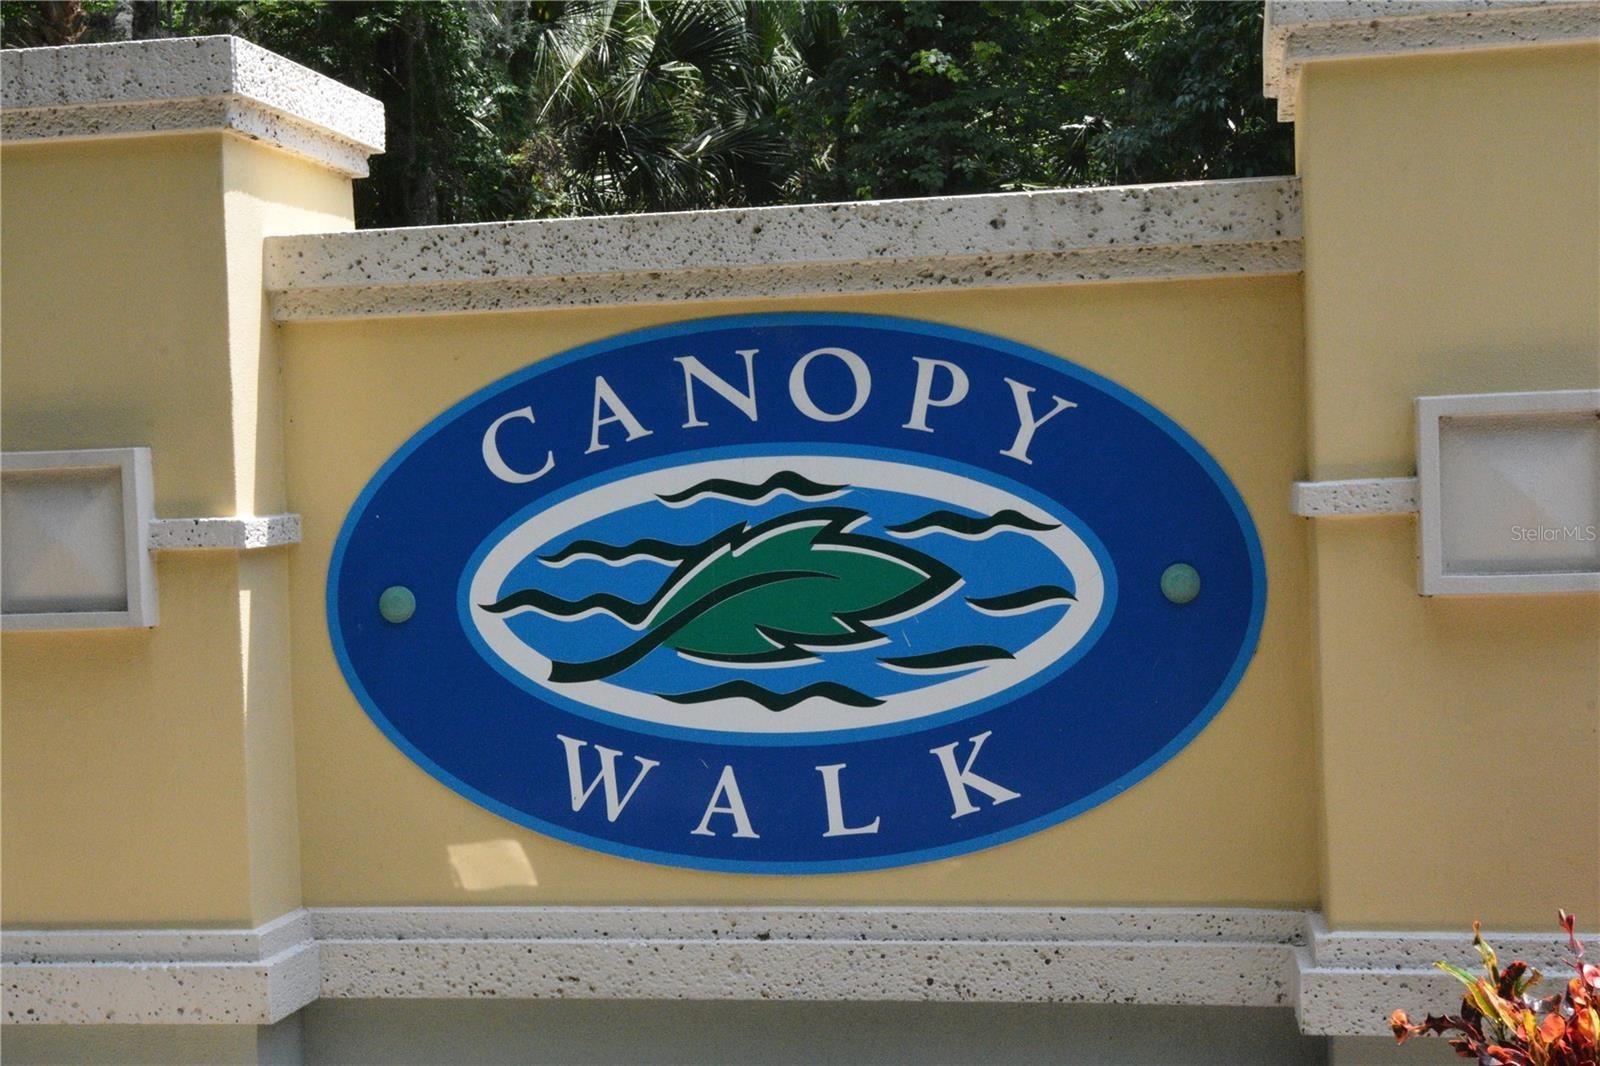 2. 300 Canopy Walk